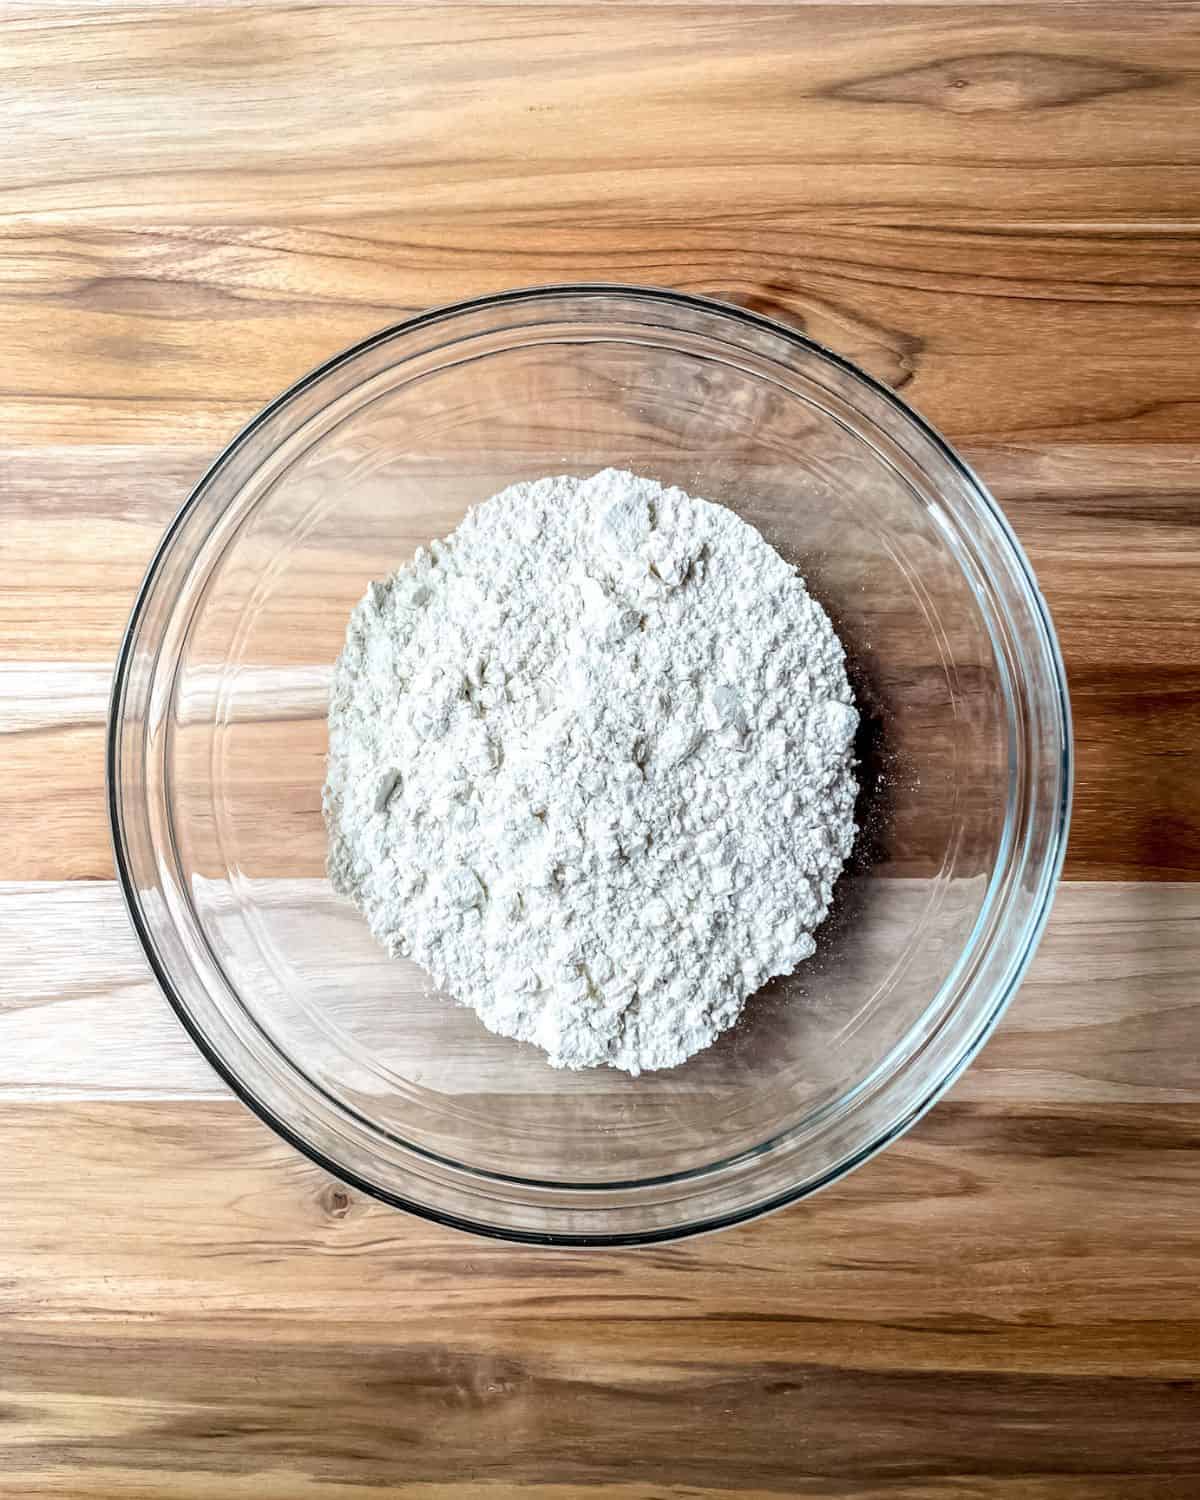 Flour in a glass bowl.